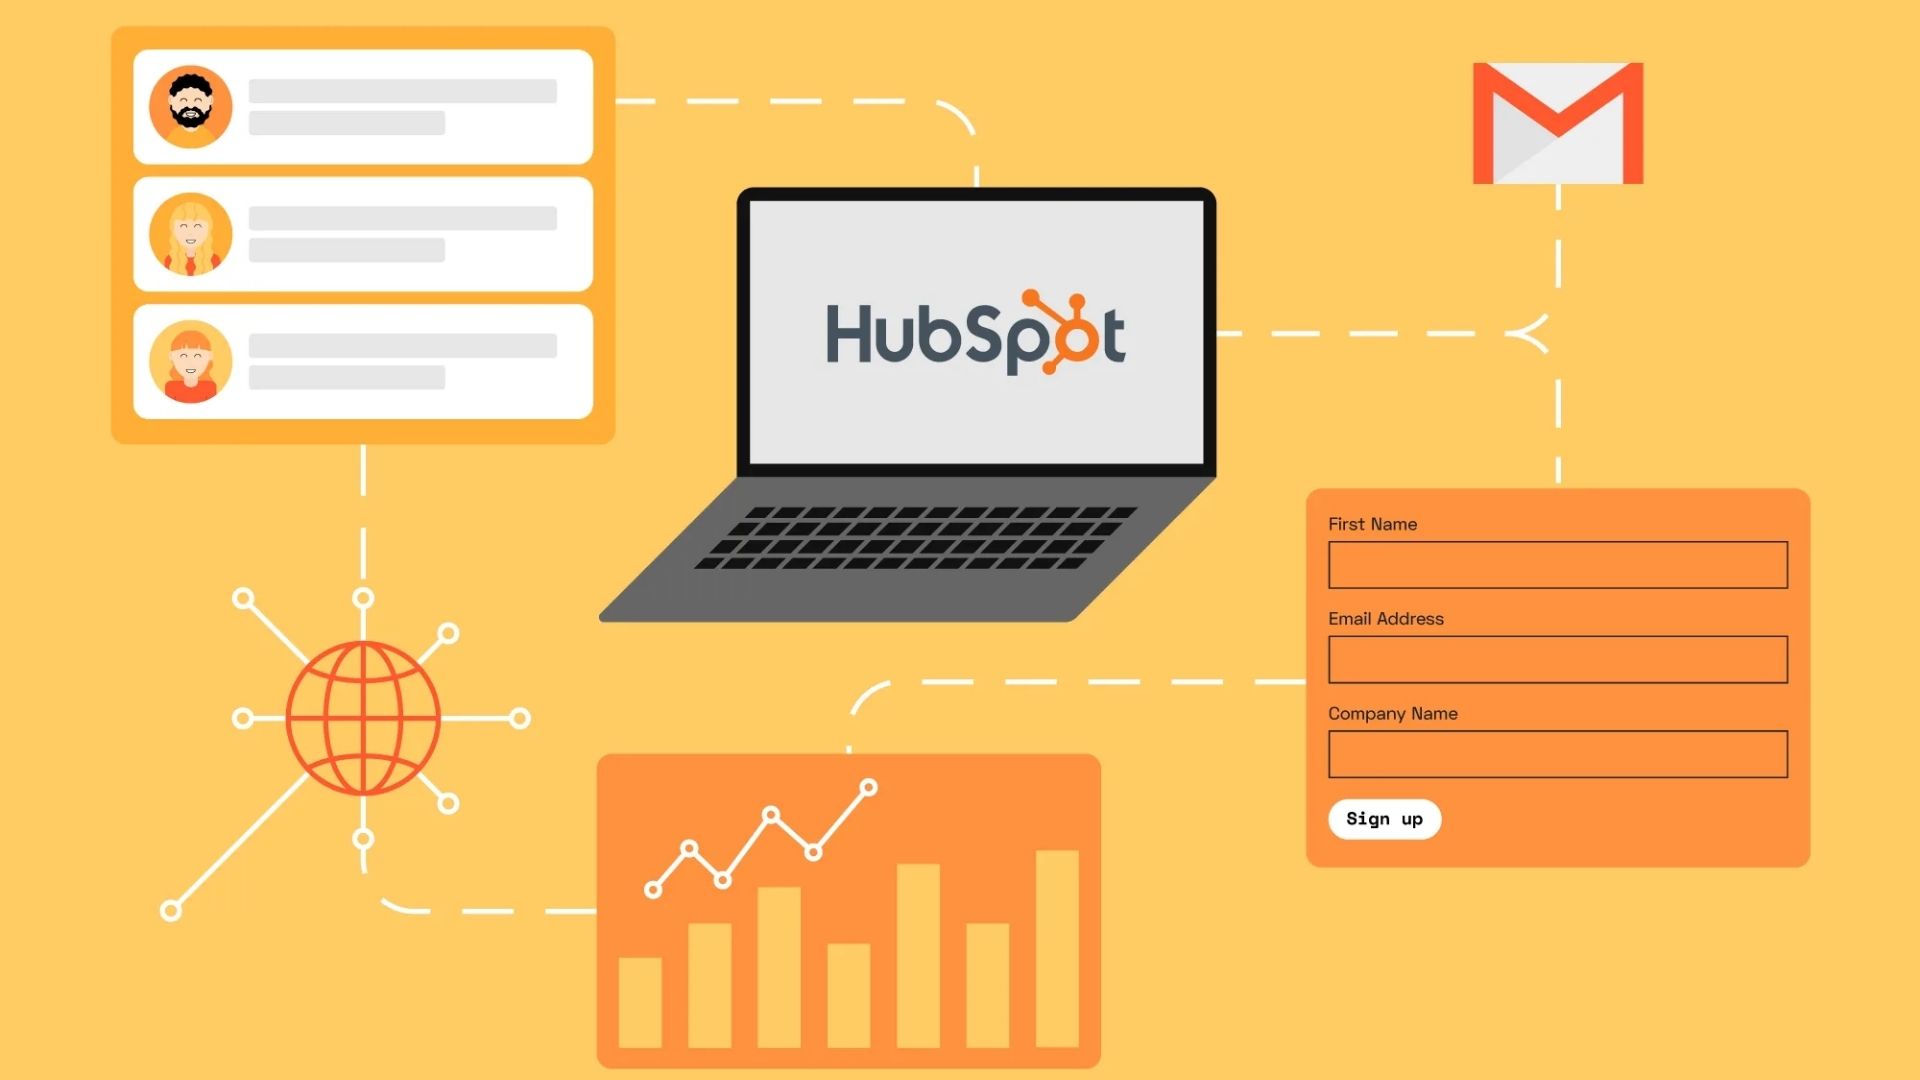 HubSpot product updates